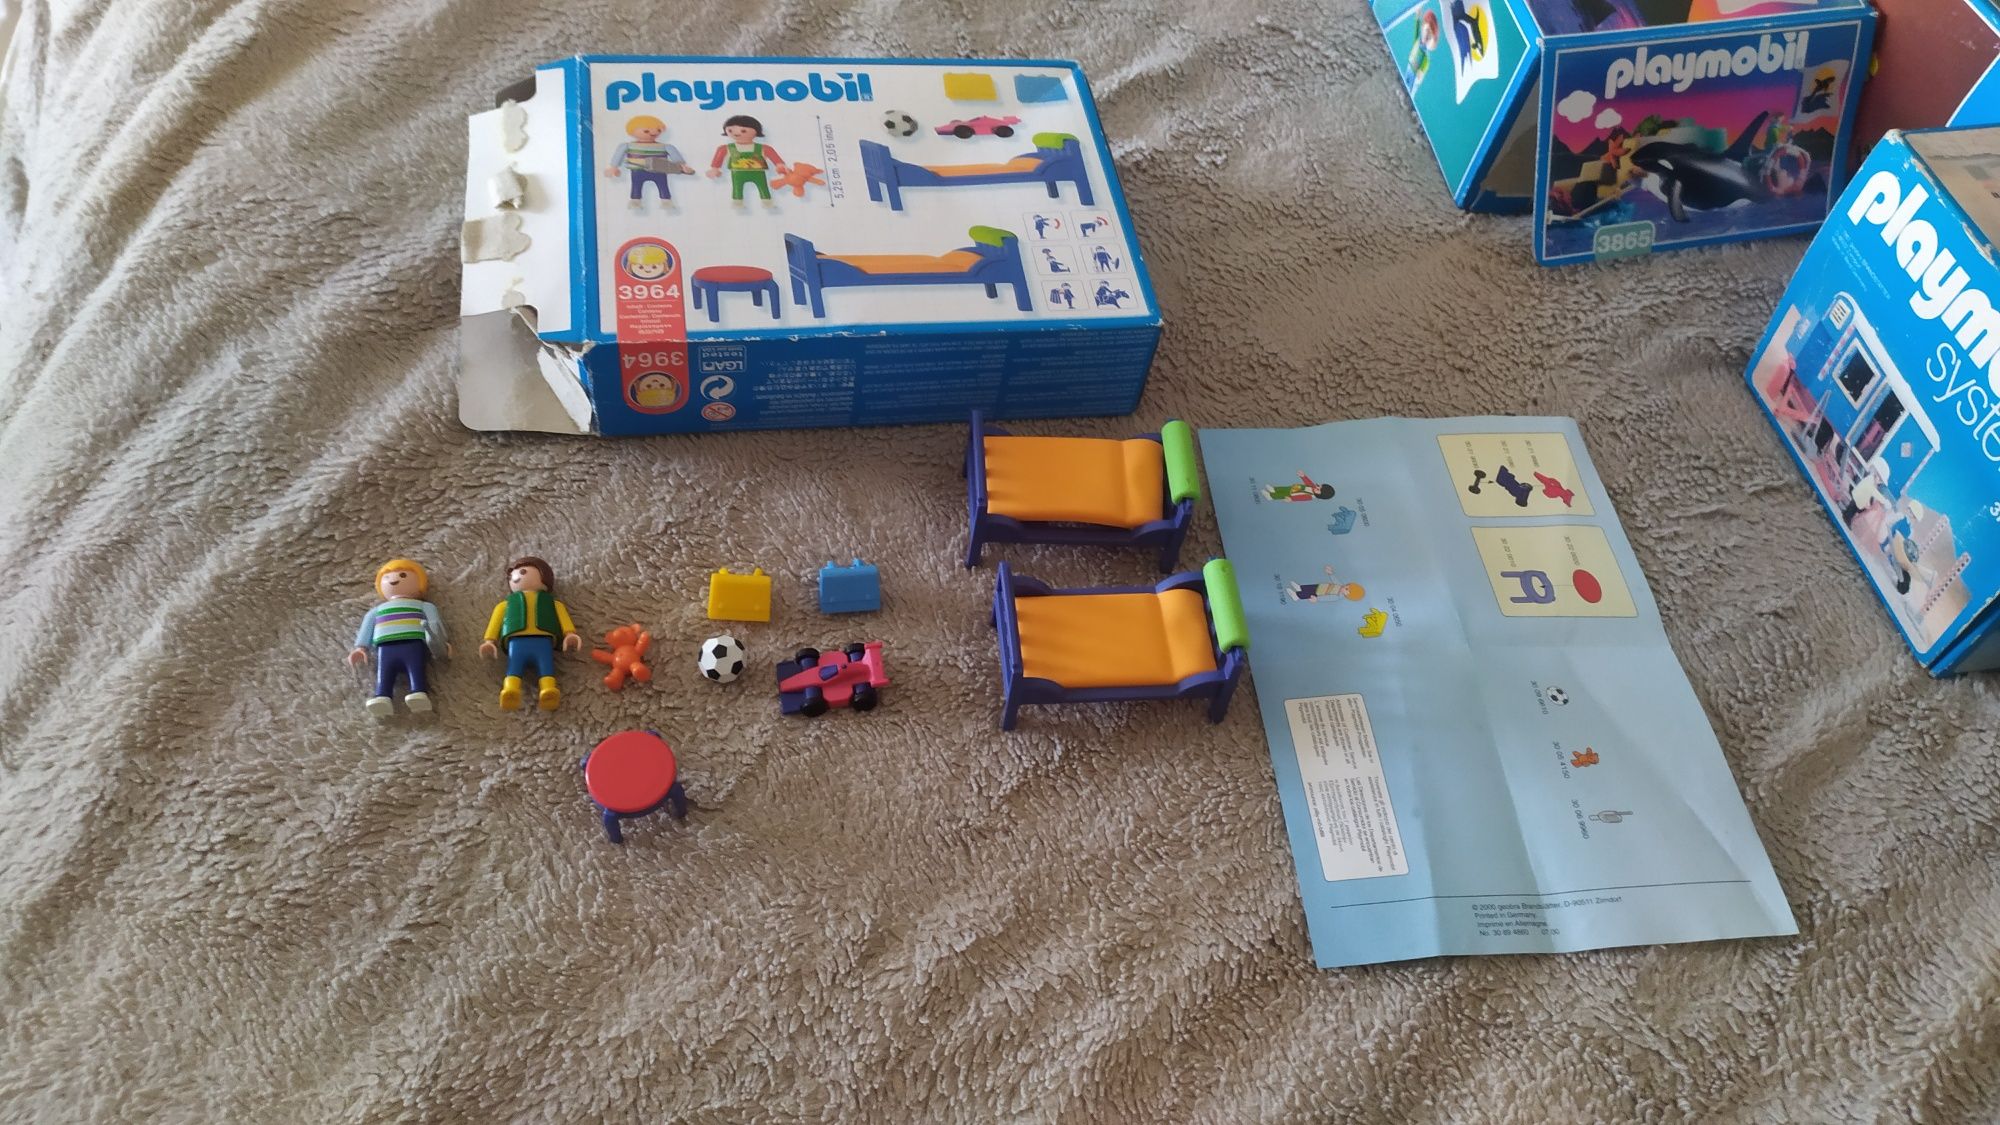 Playmobil set 3964